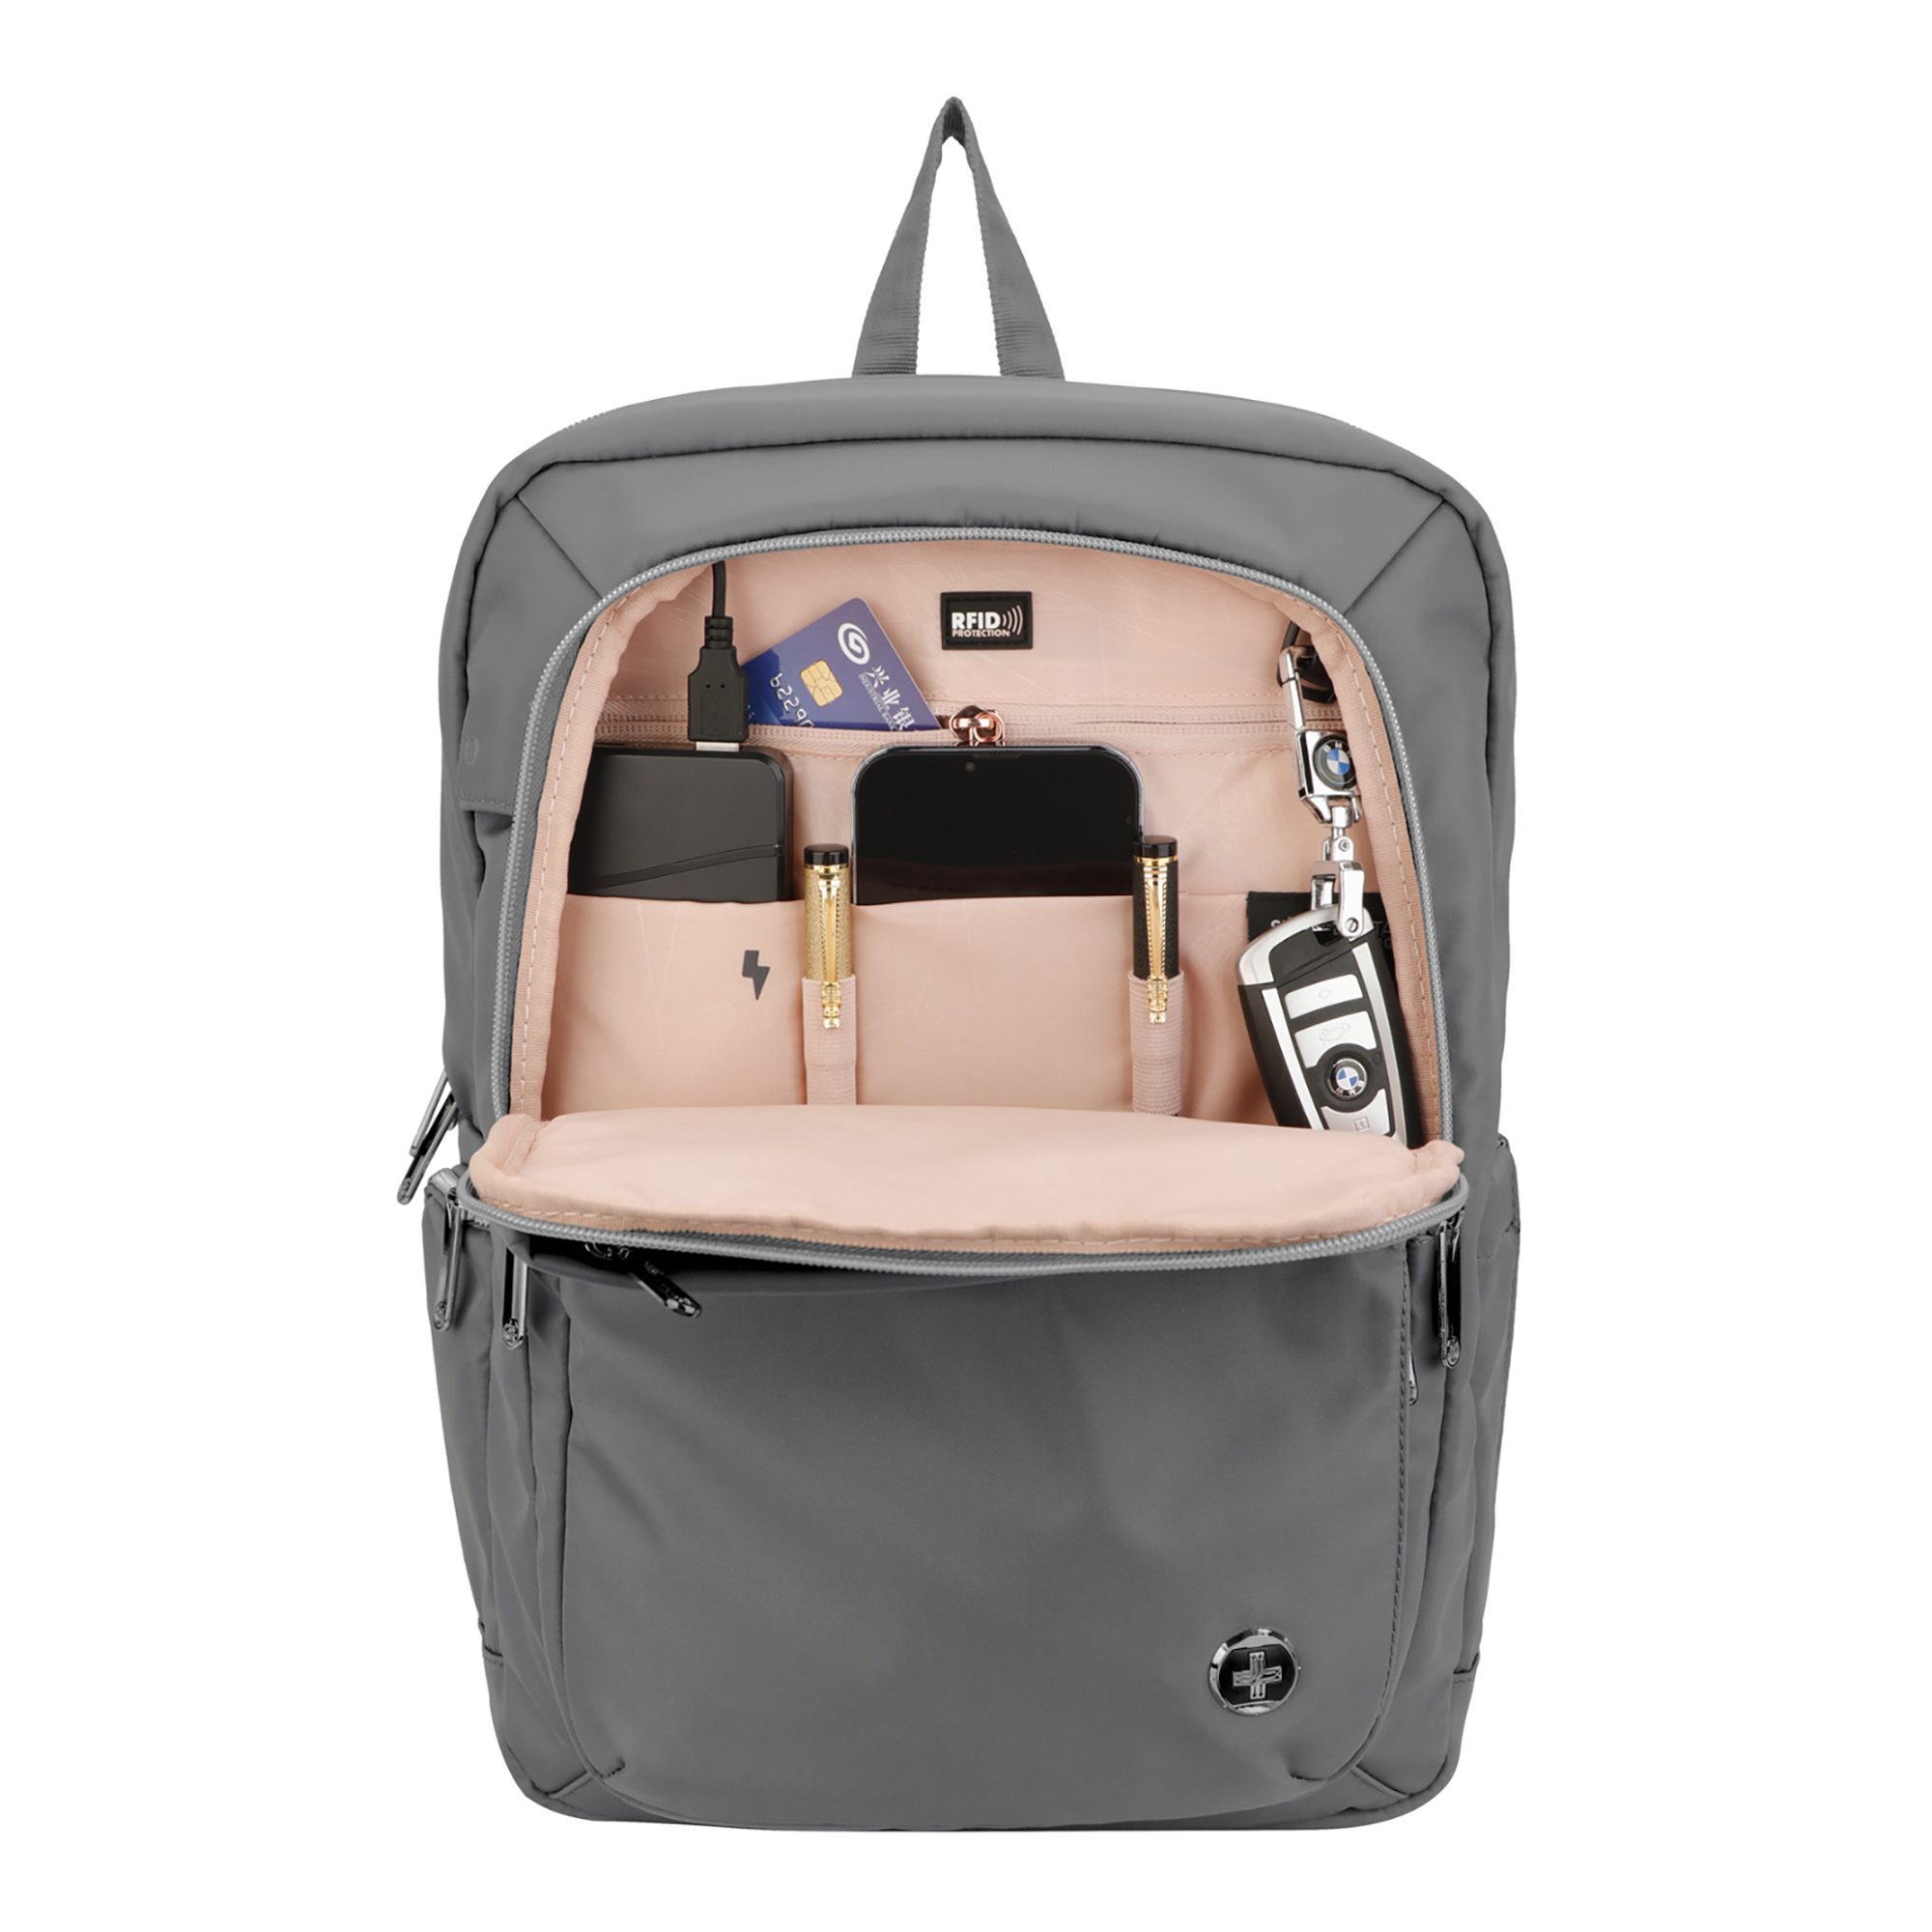 SWISSDIGITAL Backpack Grau, KATY ROSE Grey Damen